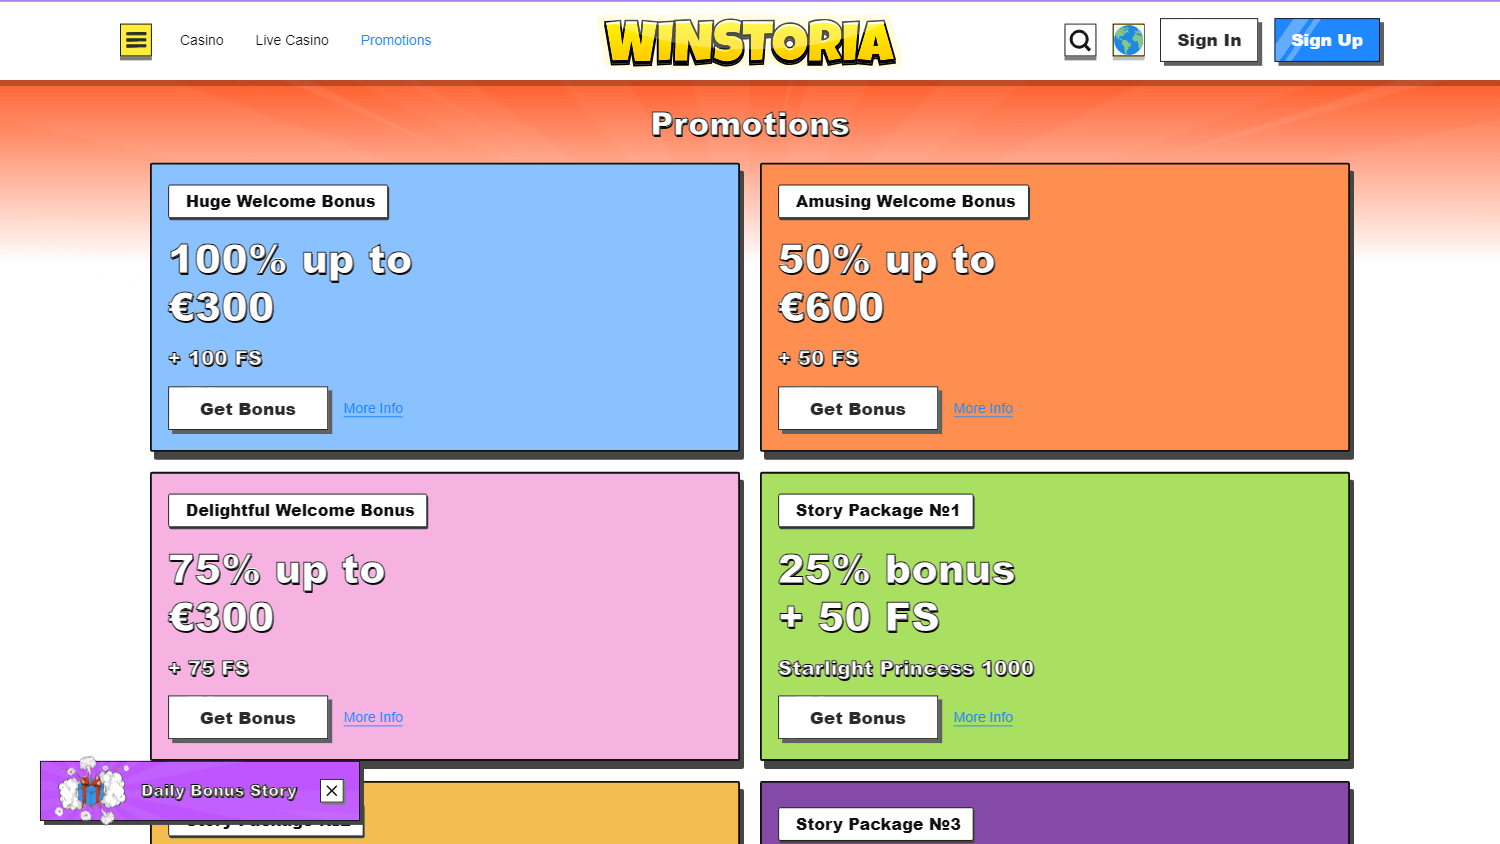 winstoria_casino_promotions_desktop